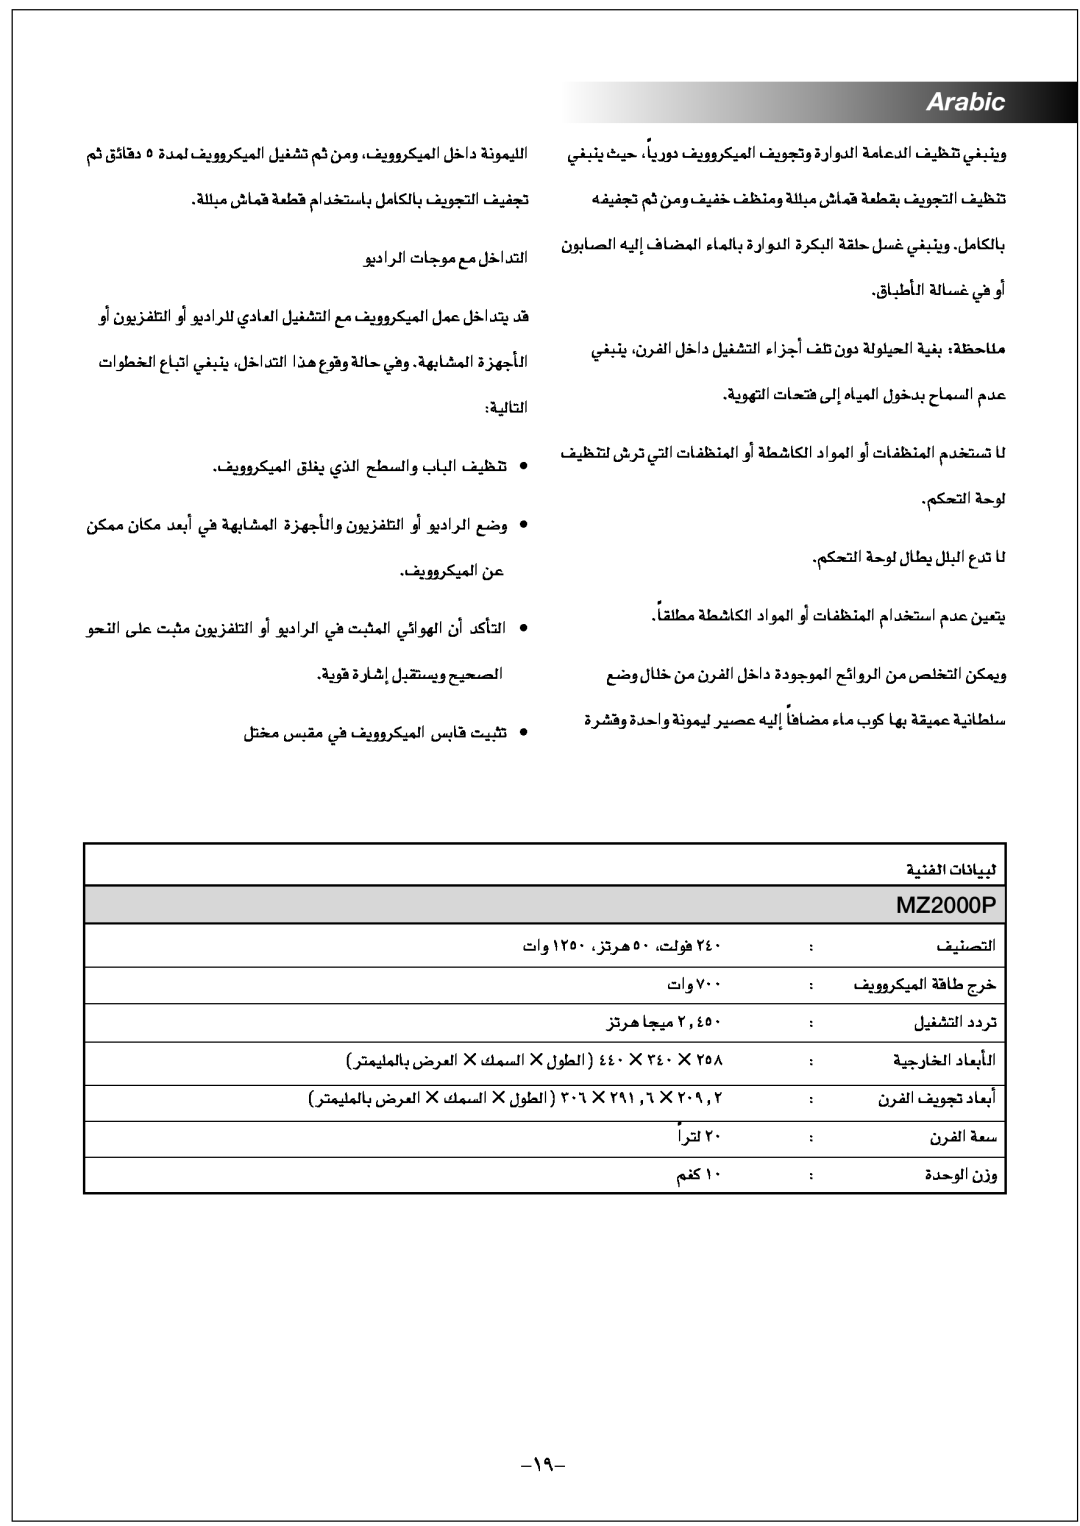 Black & Decker MZ2000P manual Arabic 